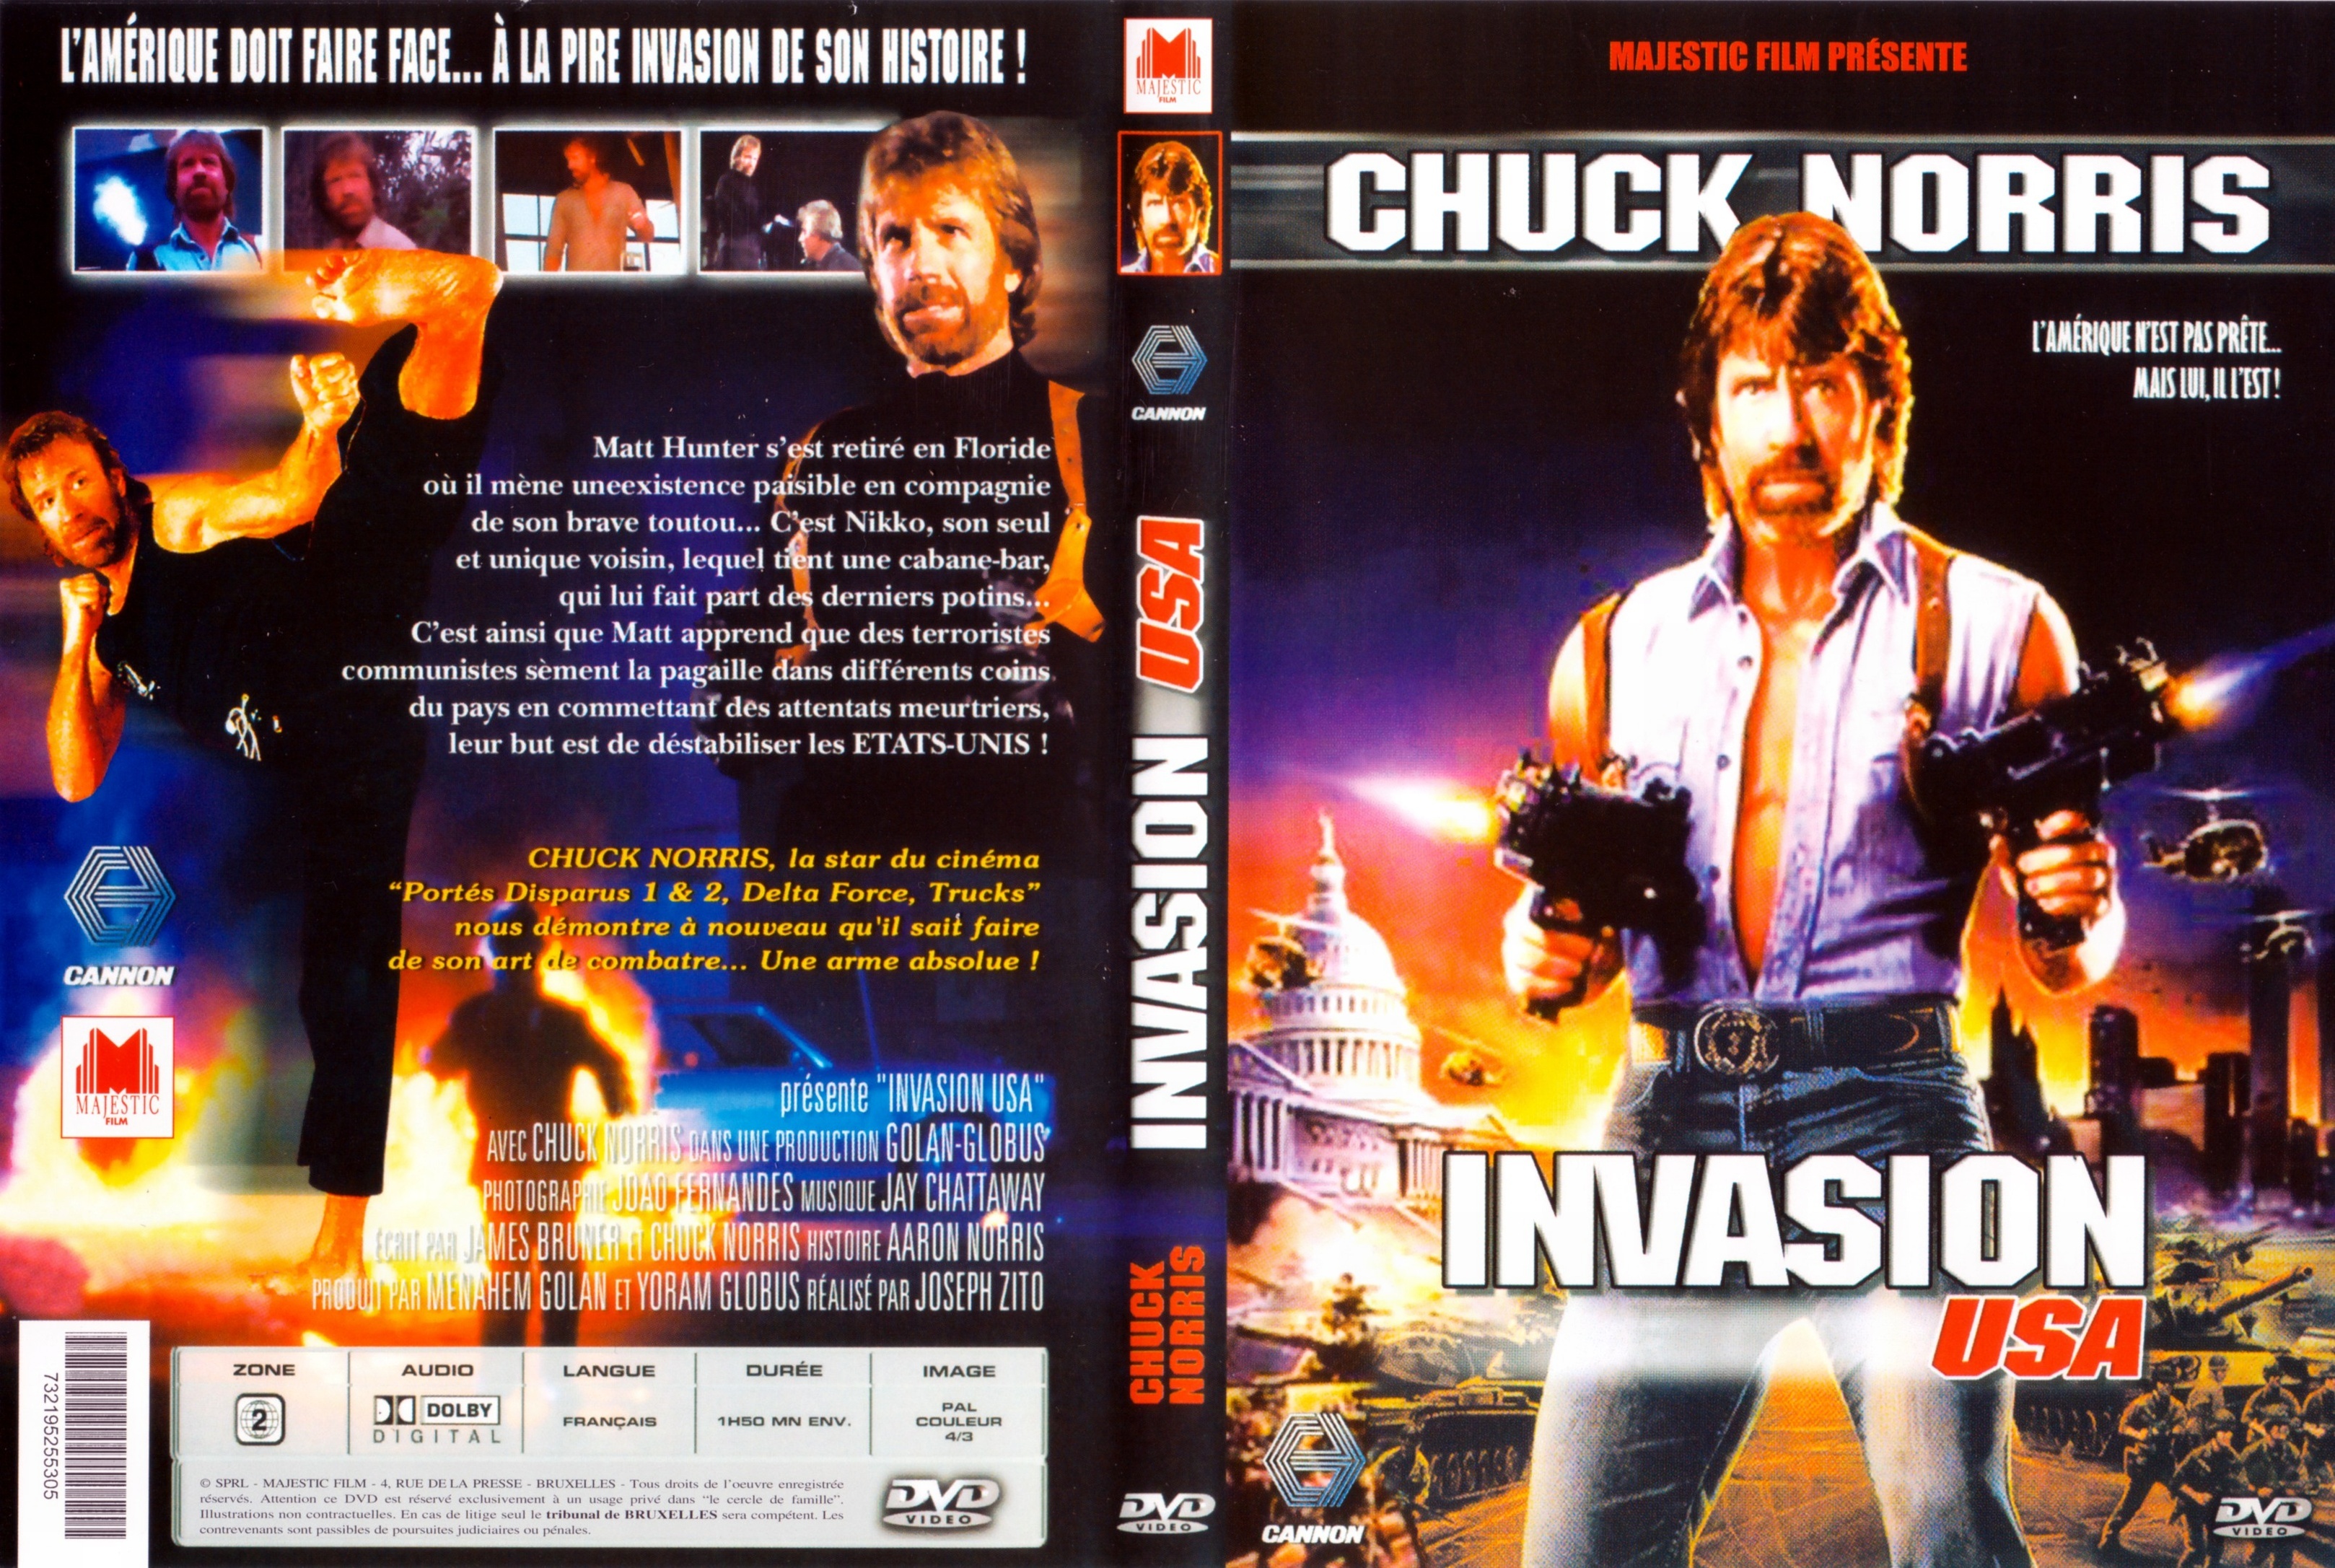 Jaquette DVD Invasion USA v2